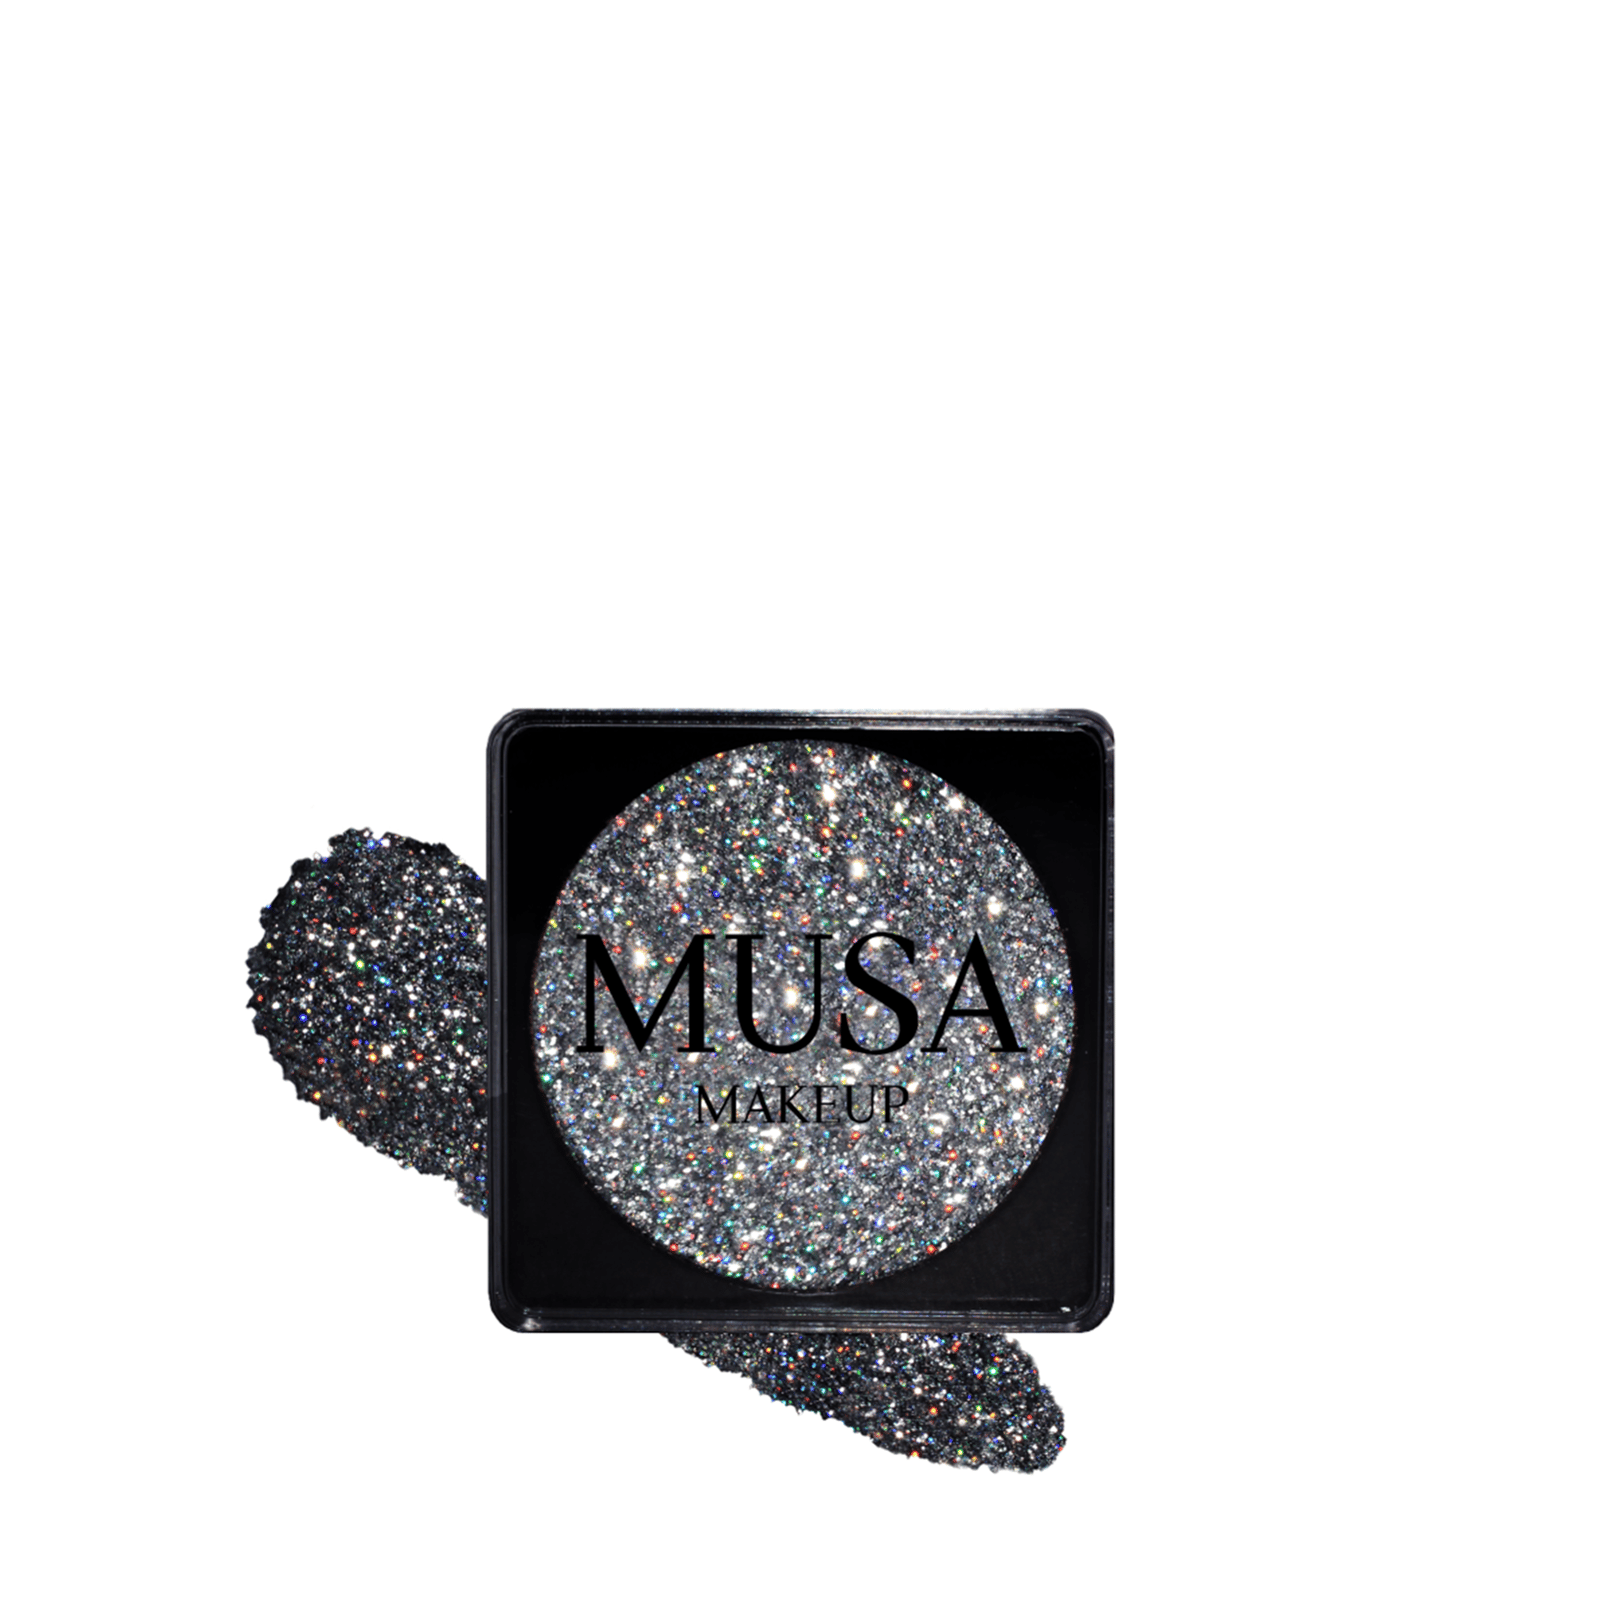 MUSA Makeup Creamy Glitter Atalia 4g (0.14 oz)